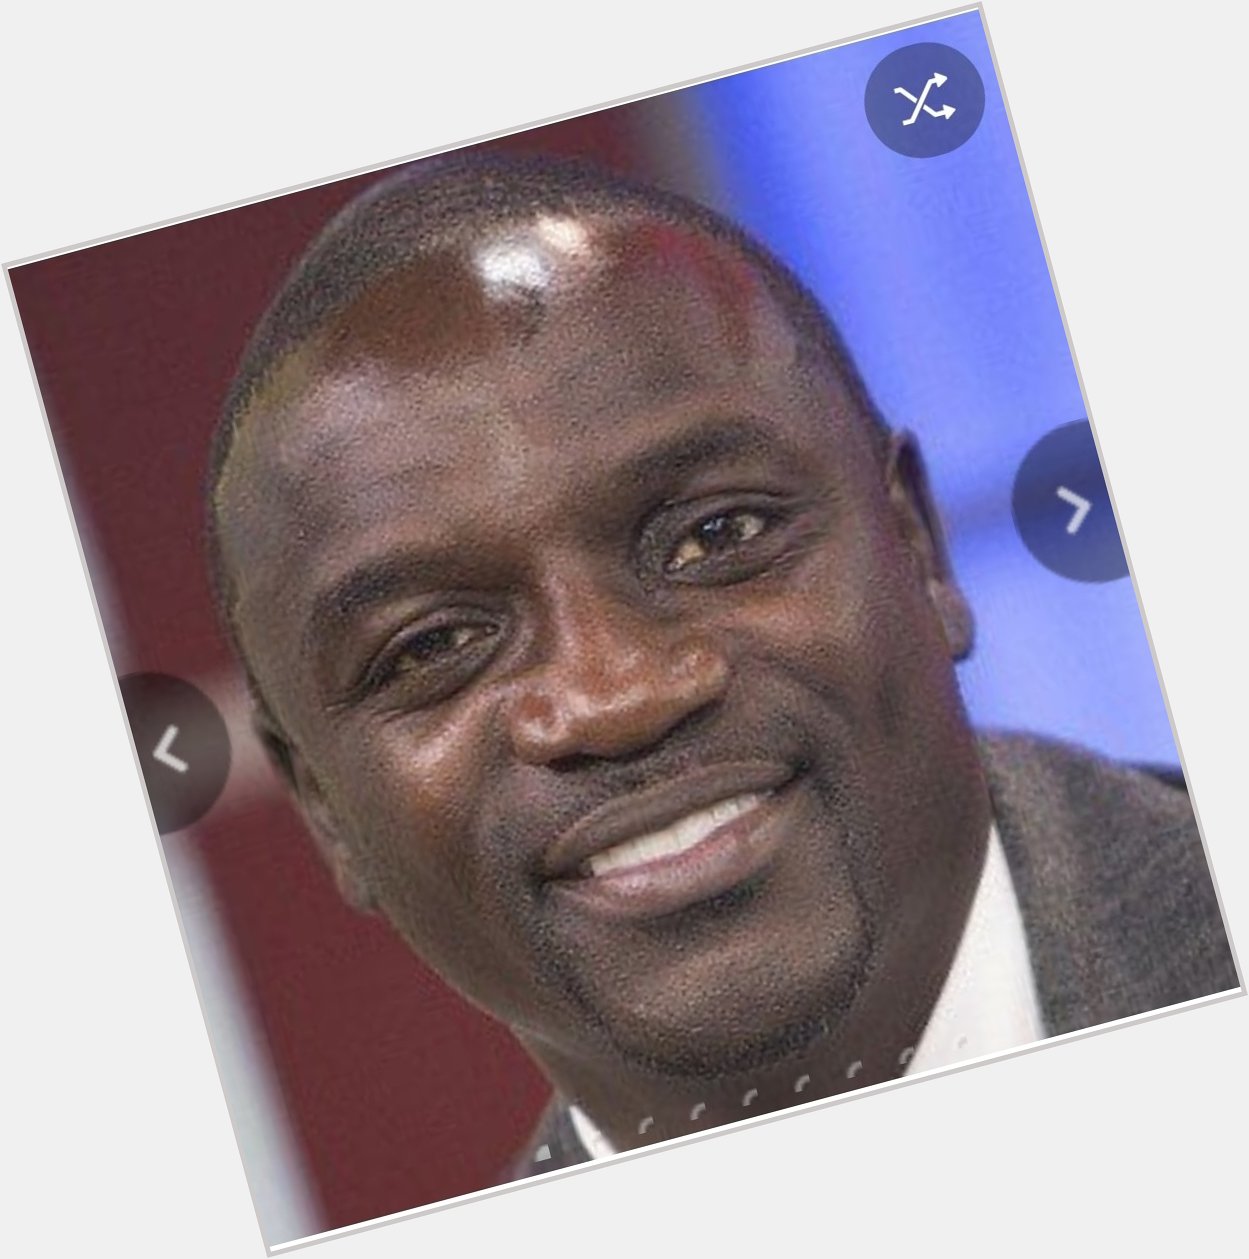 Happy Birthday to this great singer. Happy Birthday to Akon 